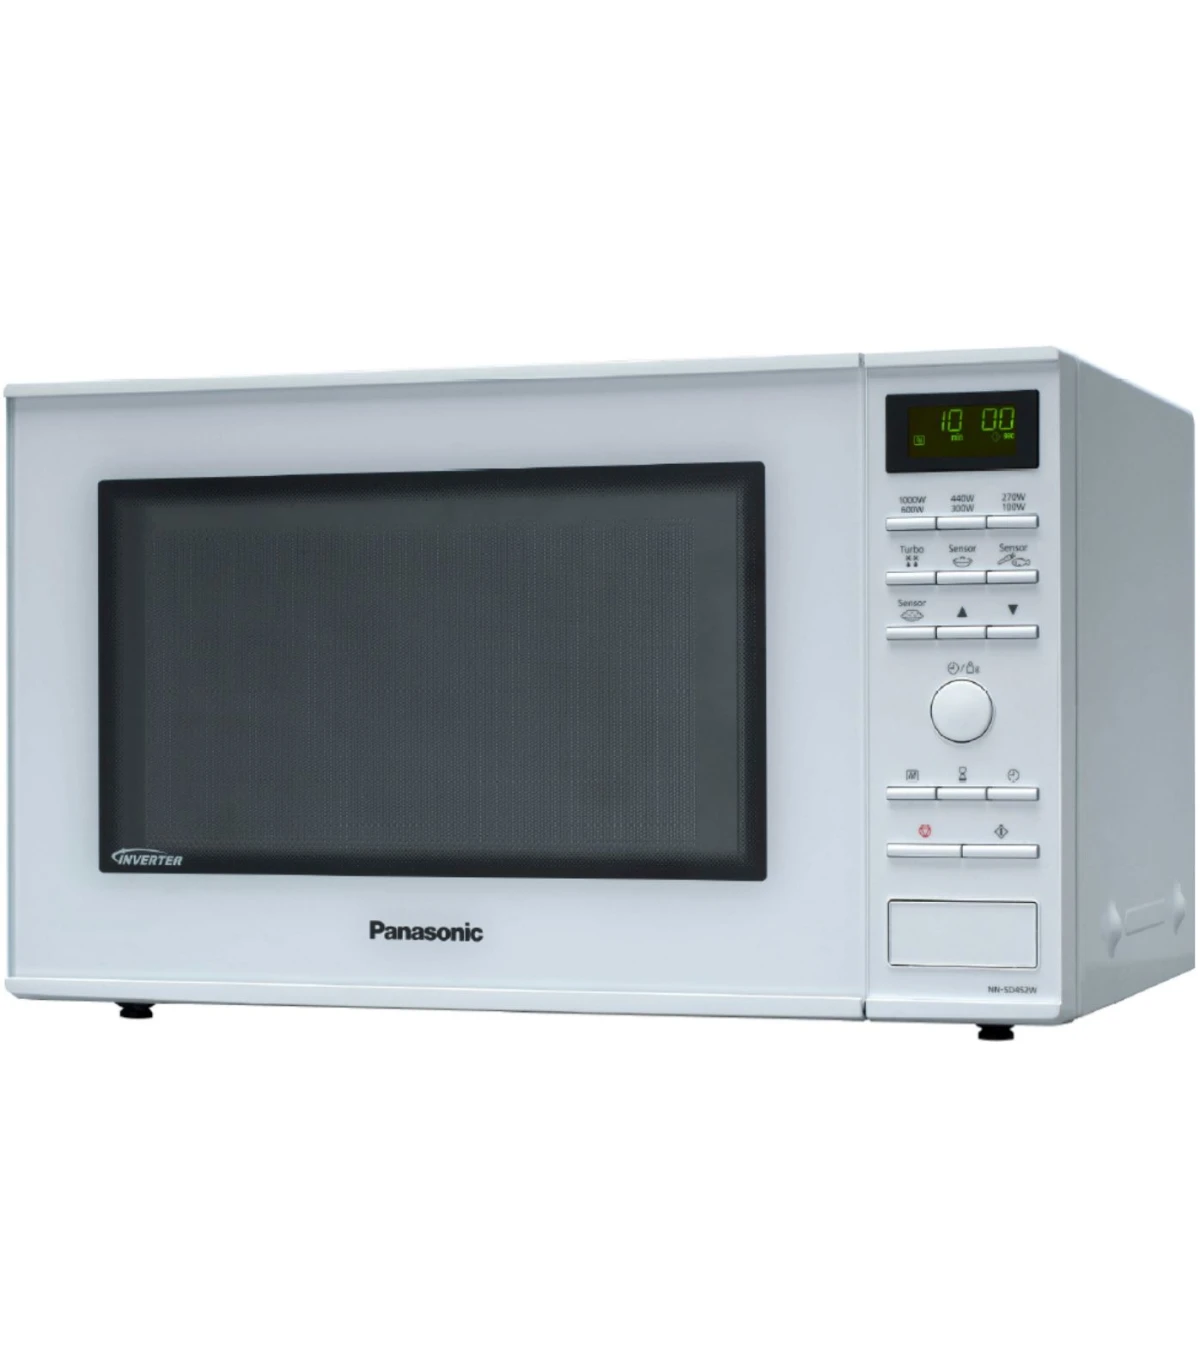 Panasonic nn-gd452 Horno Microondas Inverter con grill Capacidad 31 L potencia 1000 W Color Blanco 